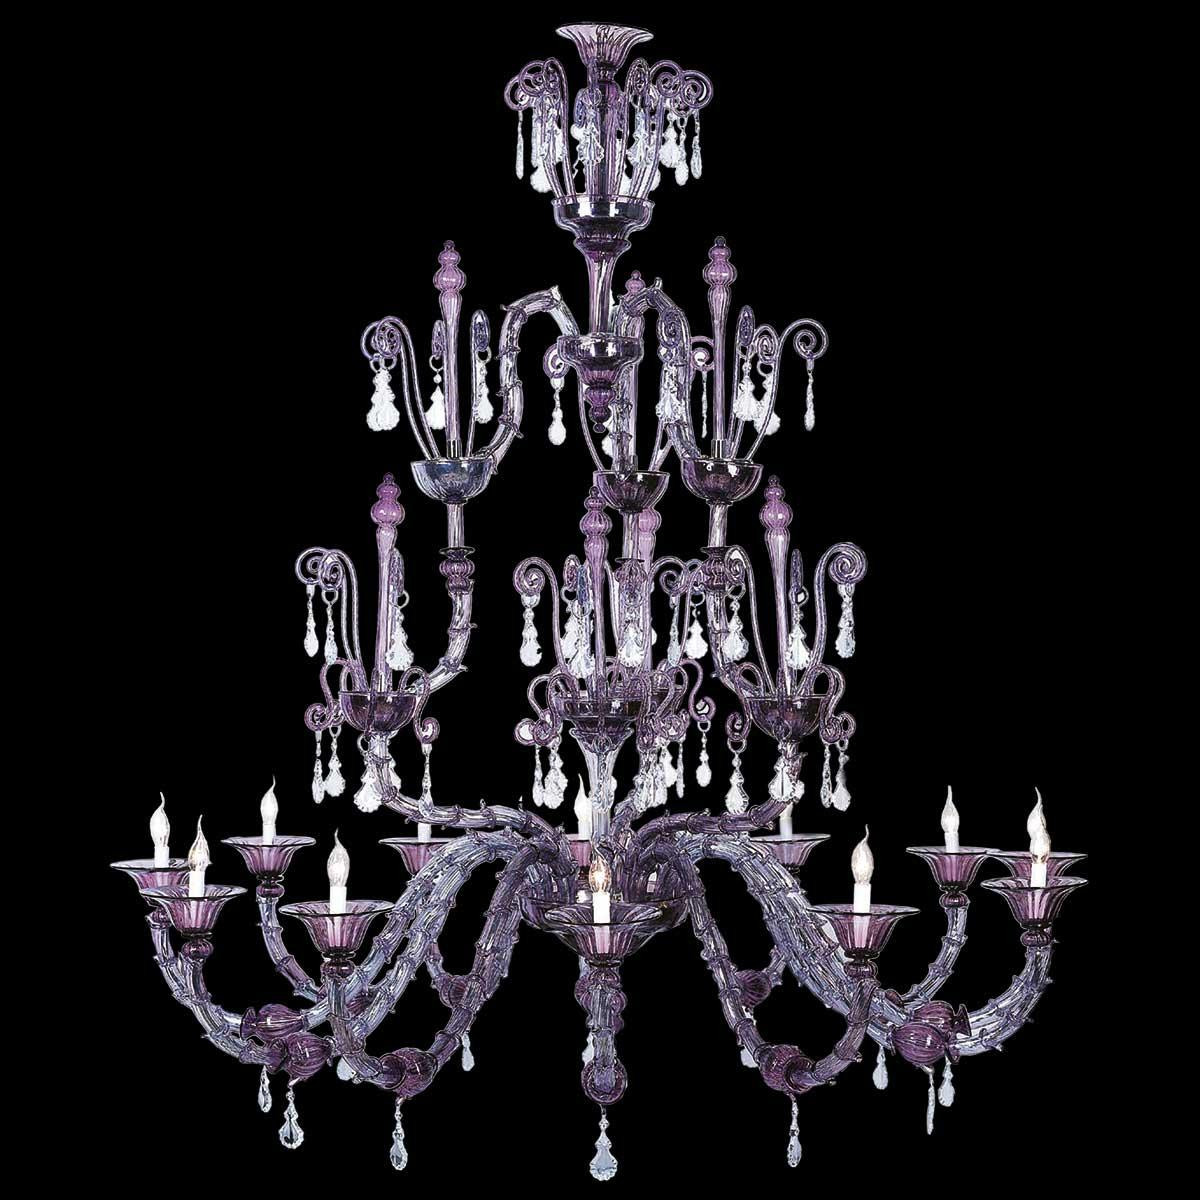 "Irene" Murano glass chandelier - 8 lights - amethyst